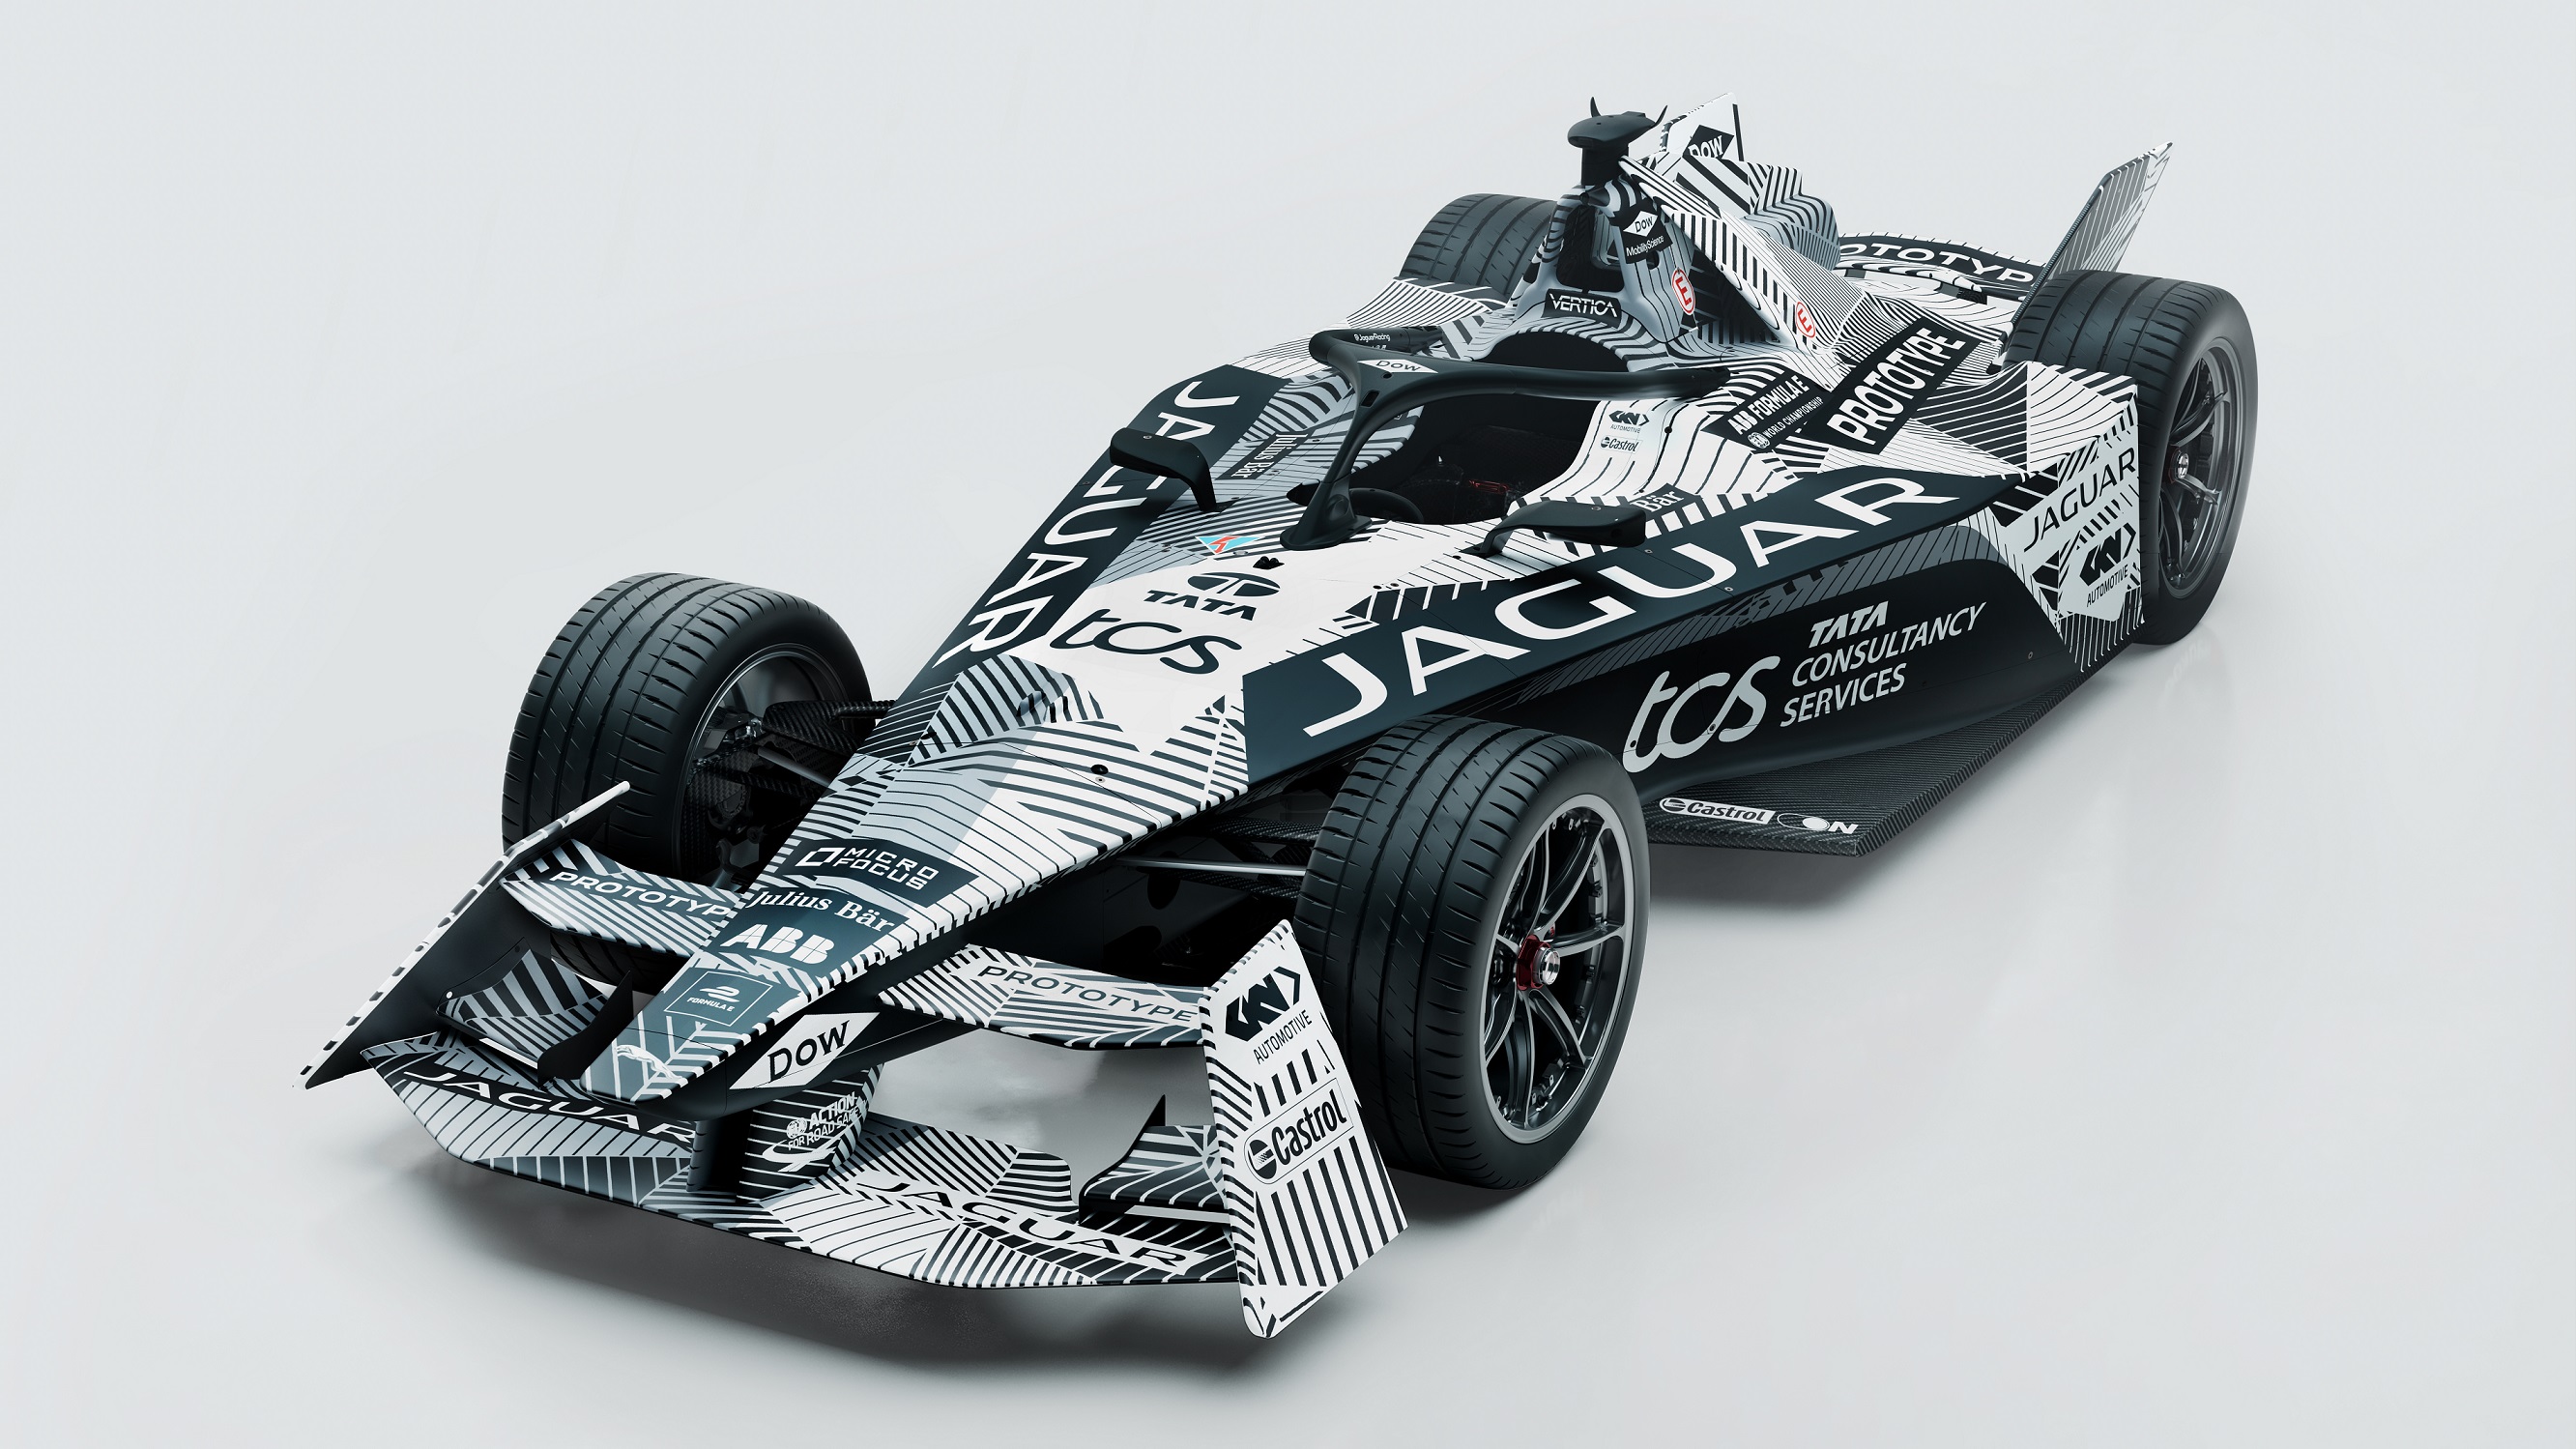 Jaguar Tcs Racing Unveil Creative Test Car Concept Livery For New Formula E Gen3 Era